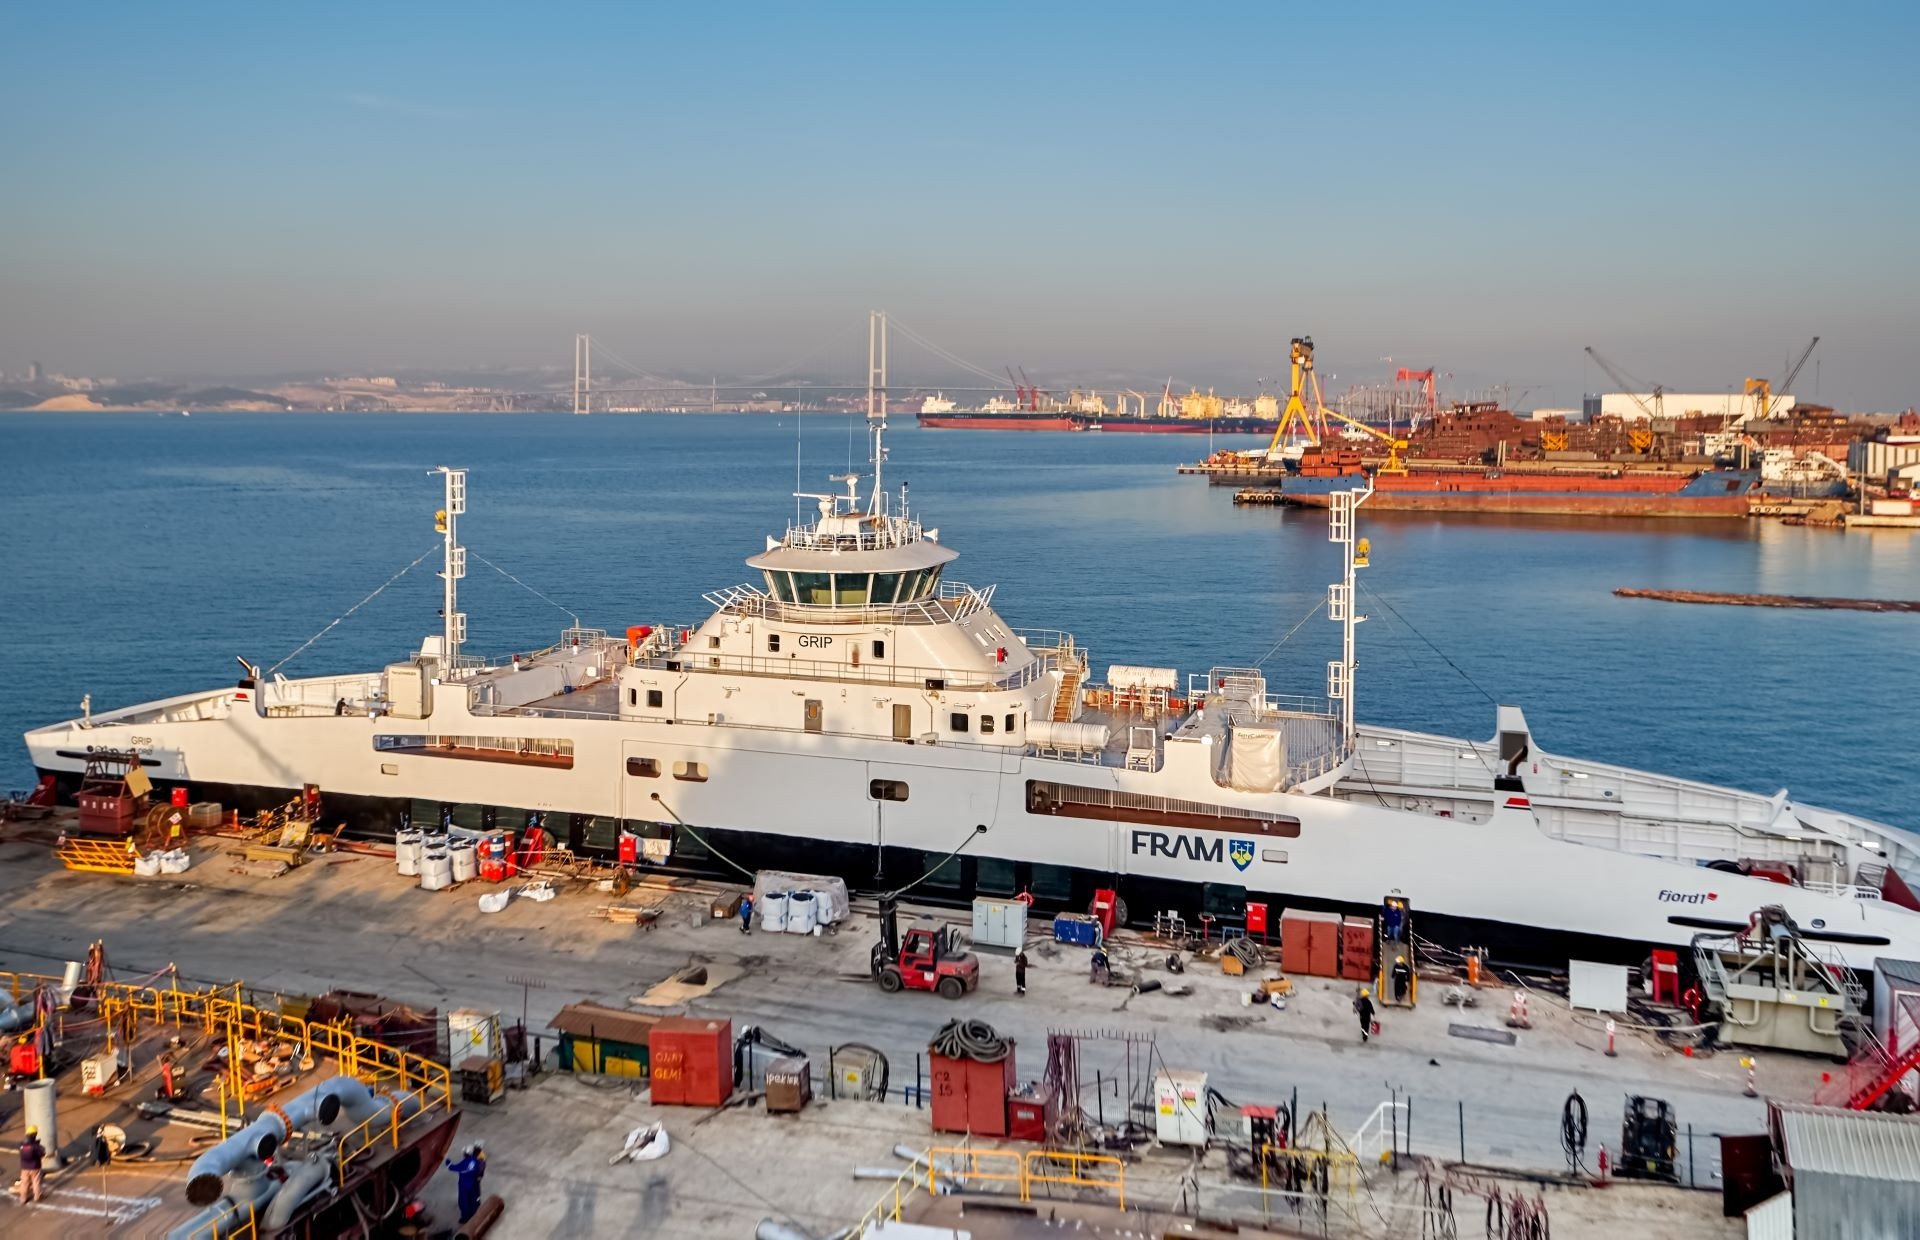 NB0069 GRIP - Cemre Shipyard